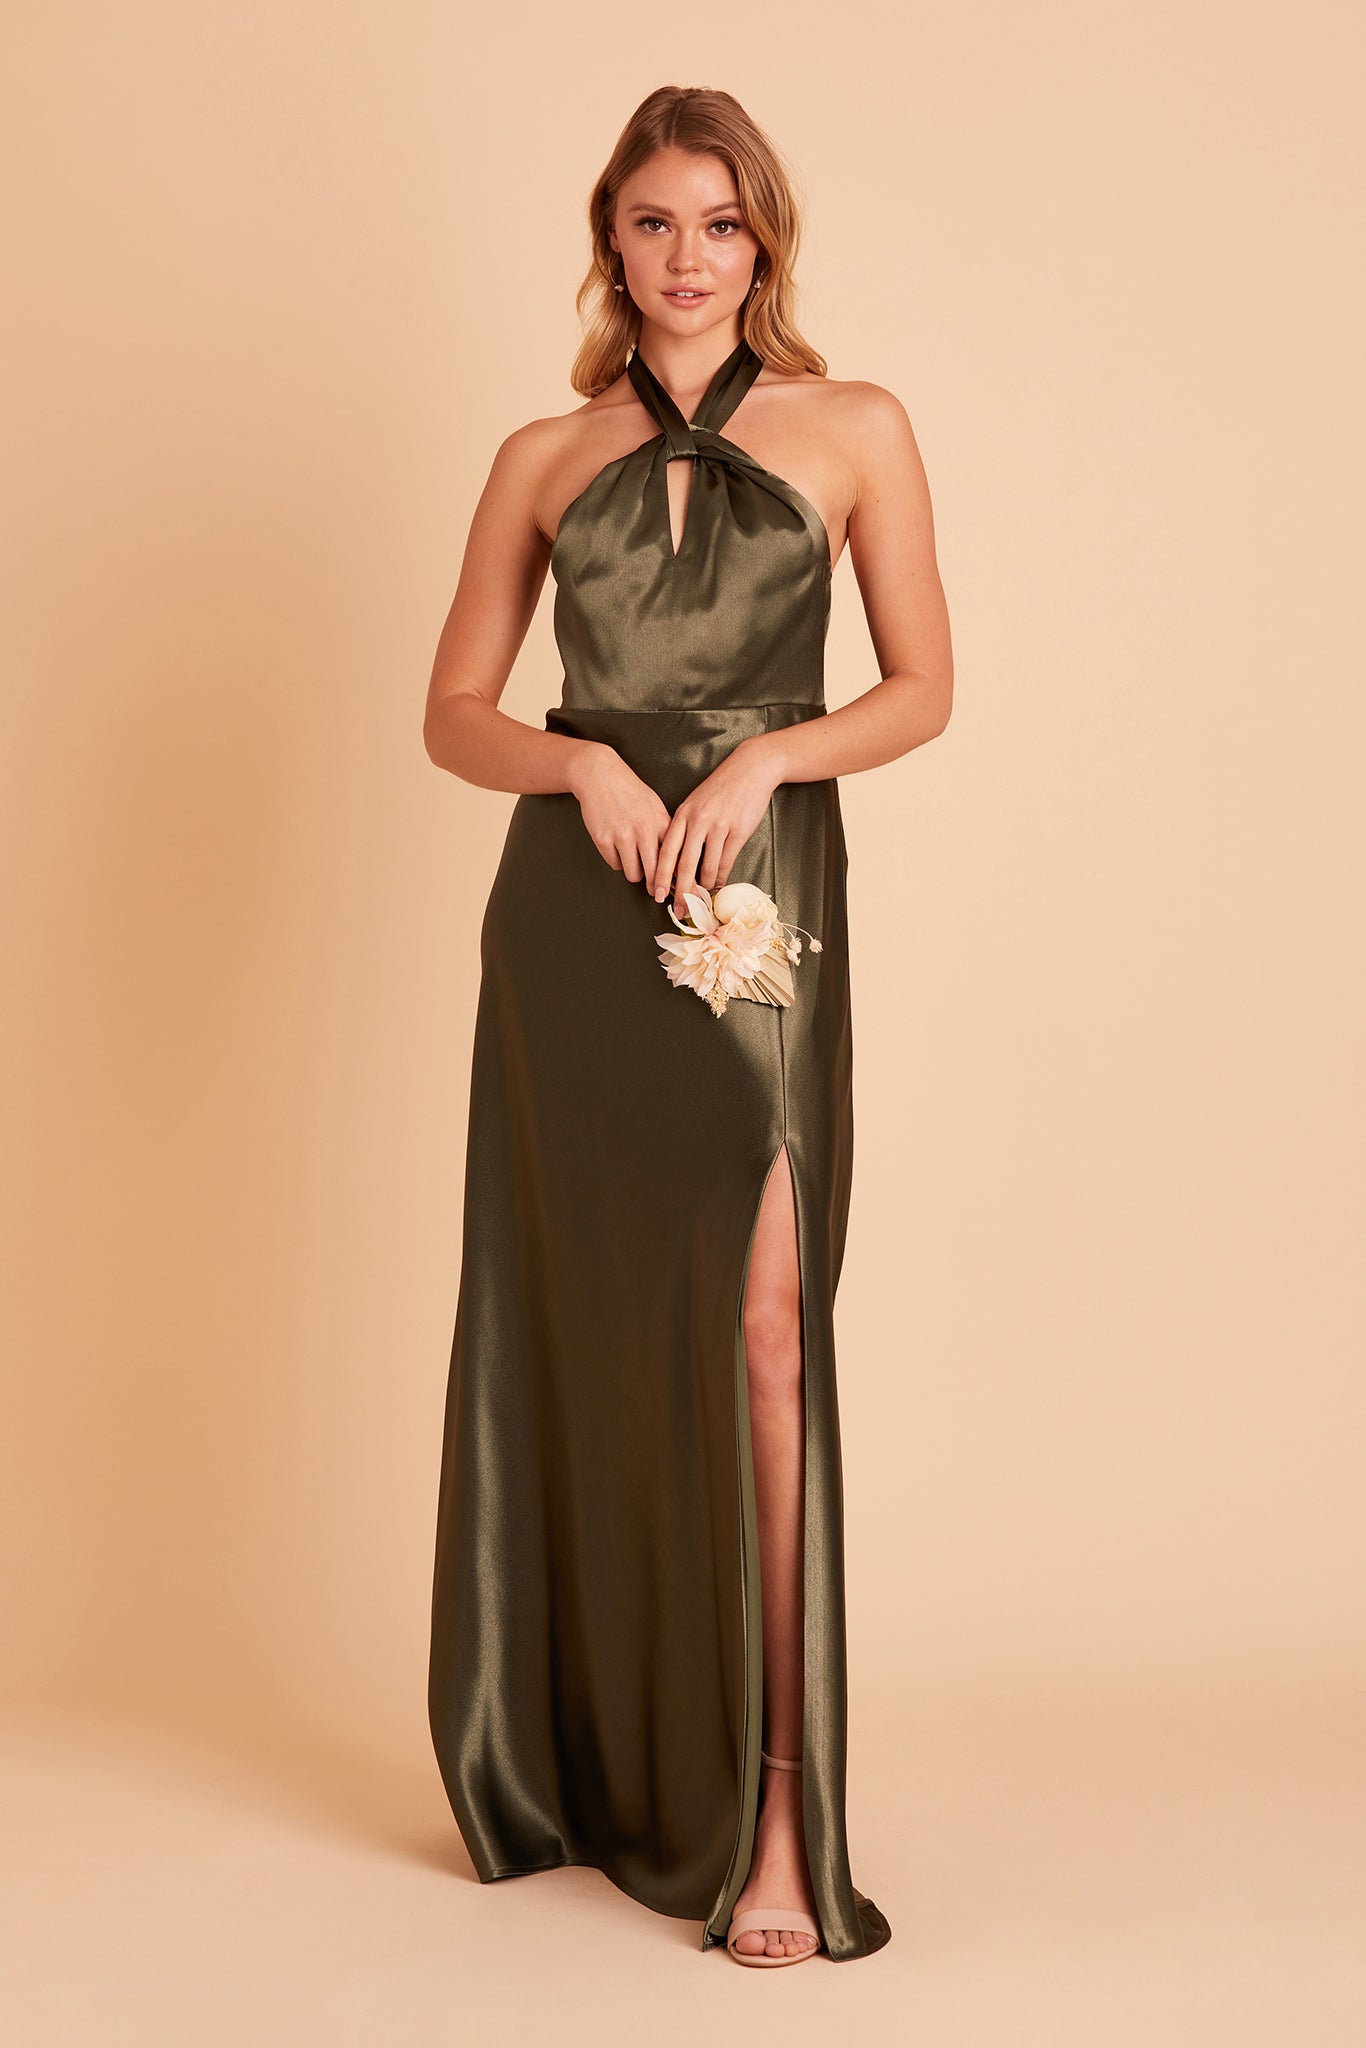 Monica Satin Bridesmaid Dress in Olive